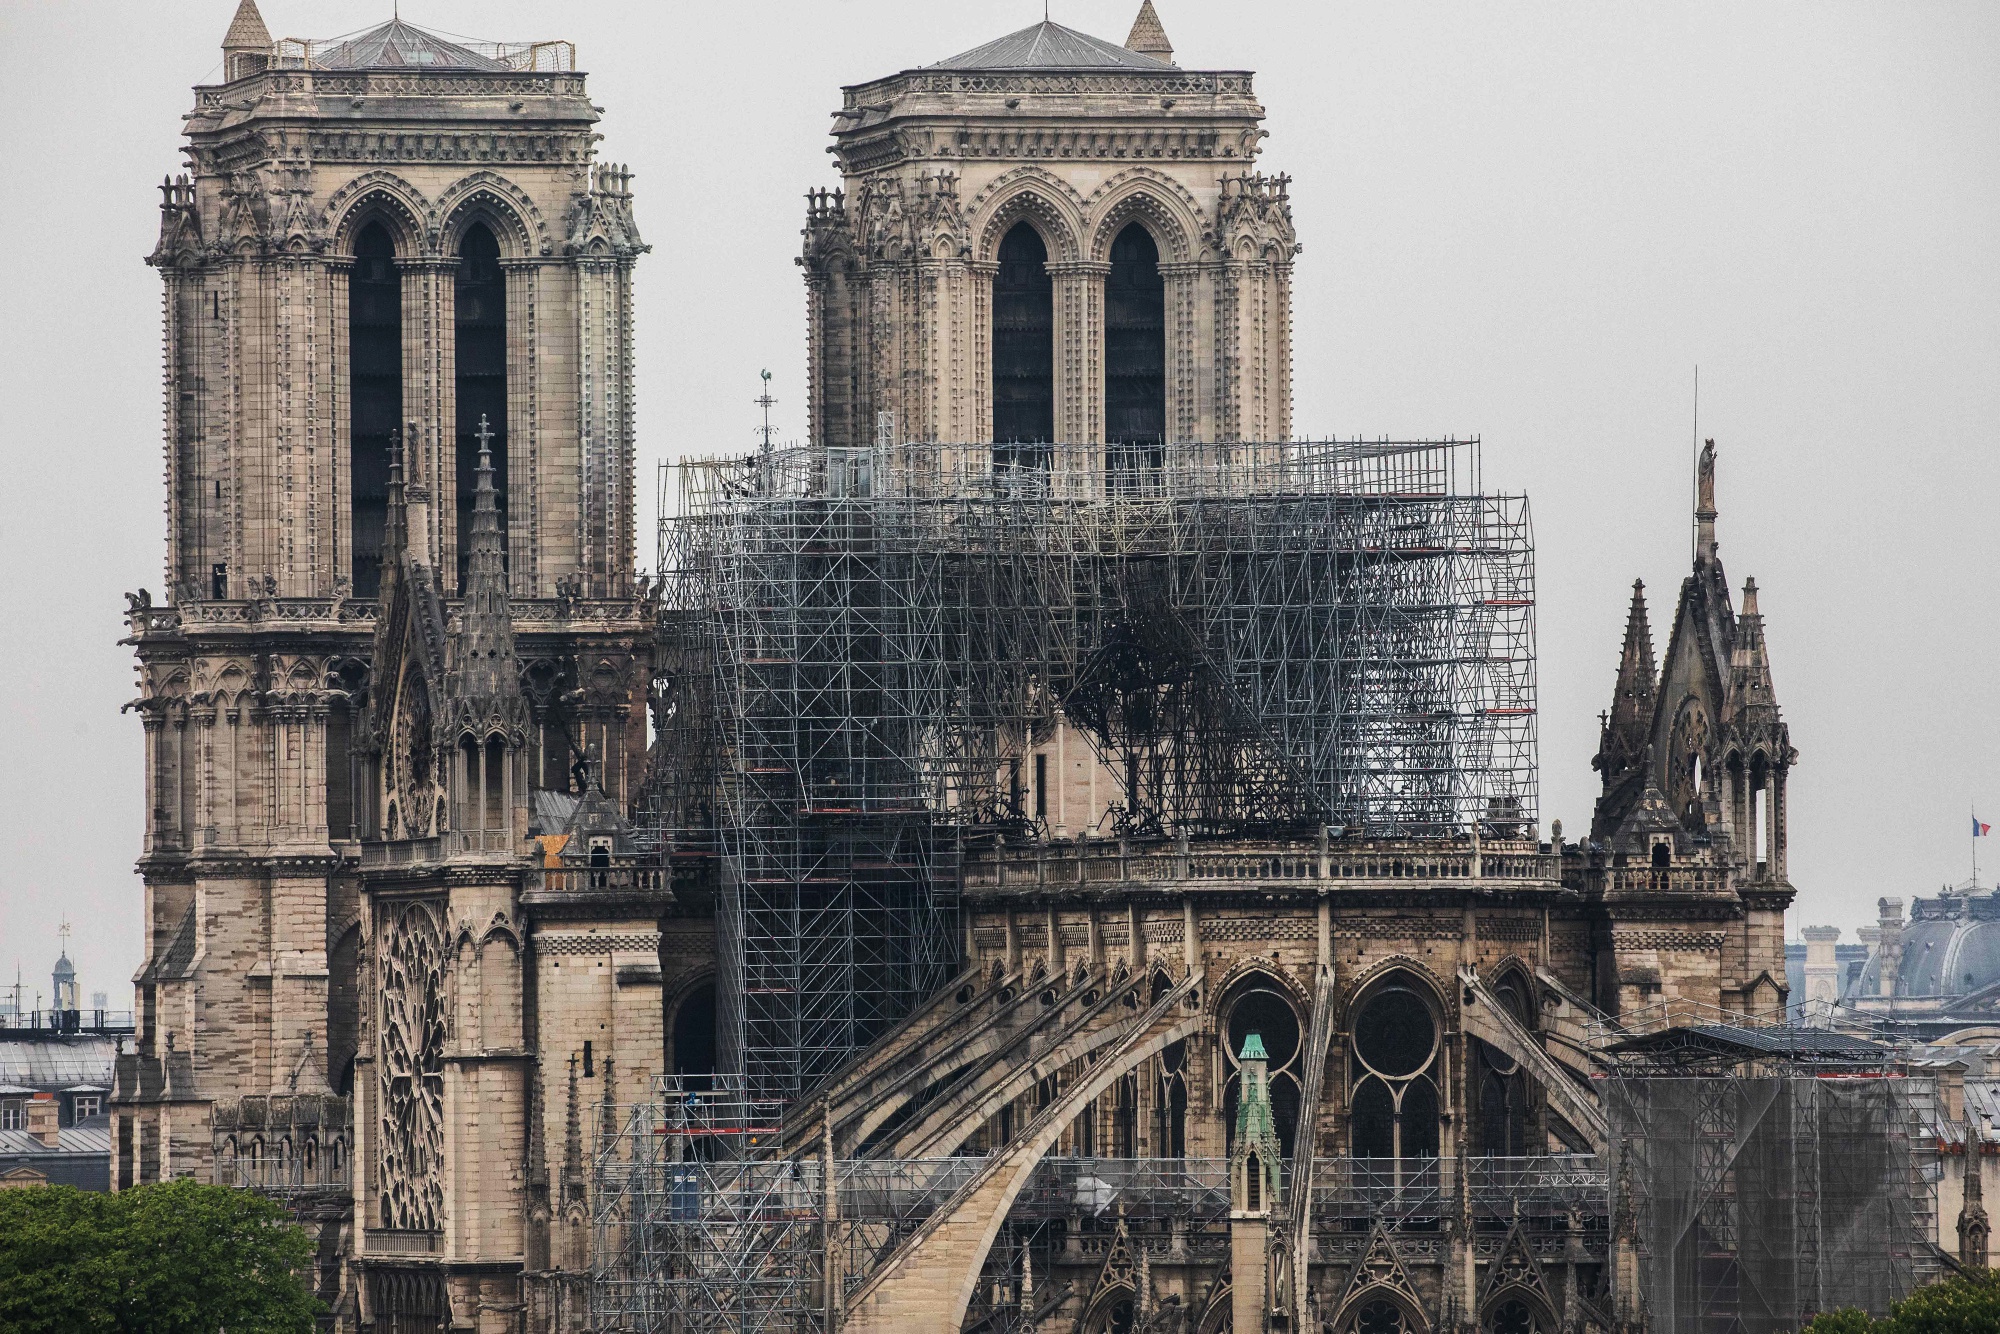 LVMH's billionaire boss defends Notre-Dame donations